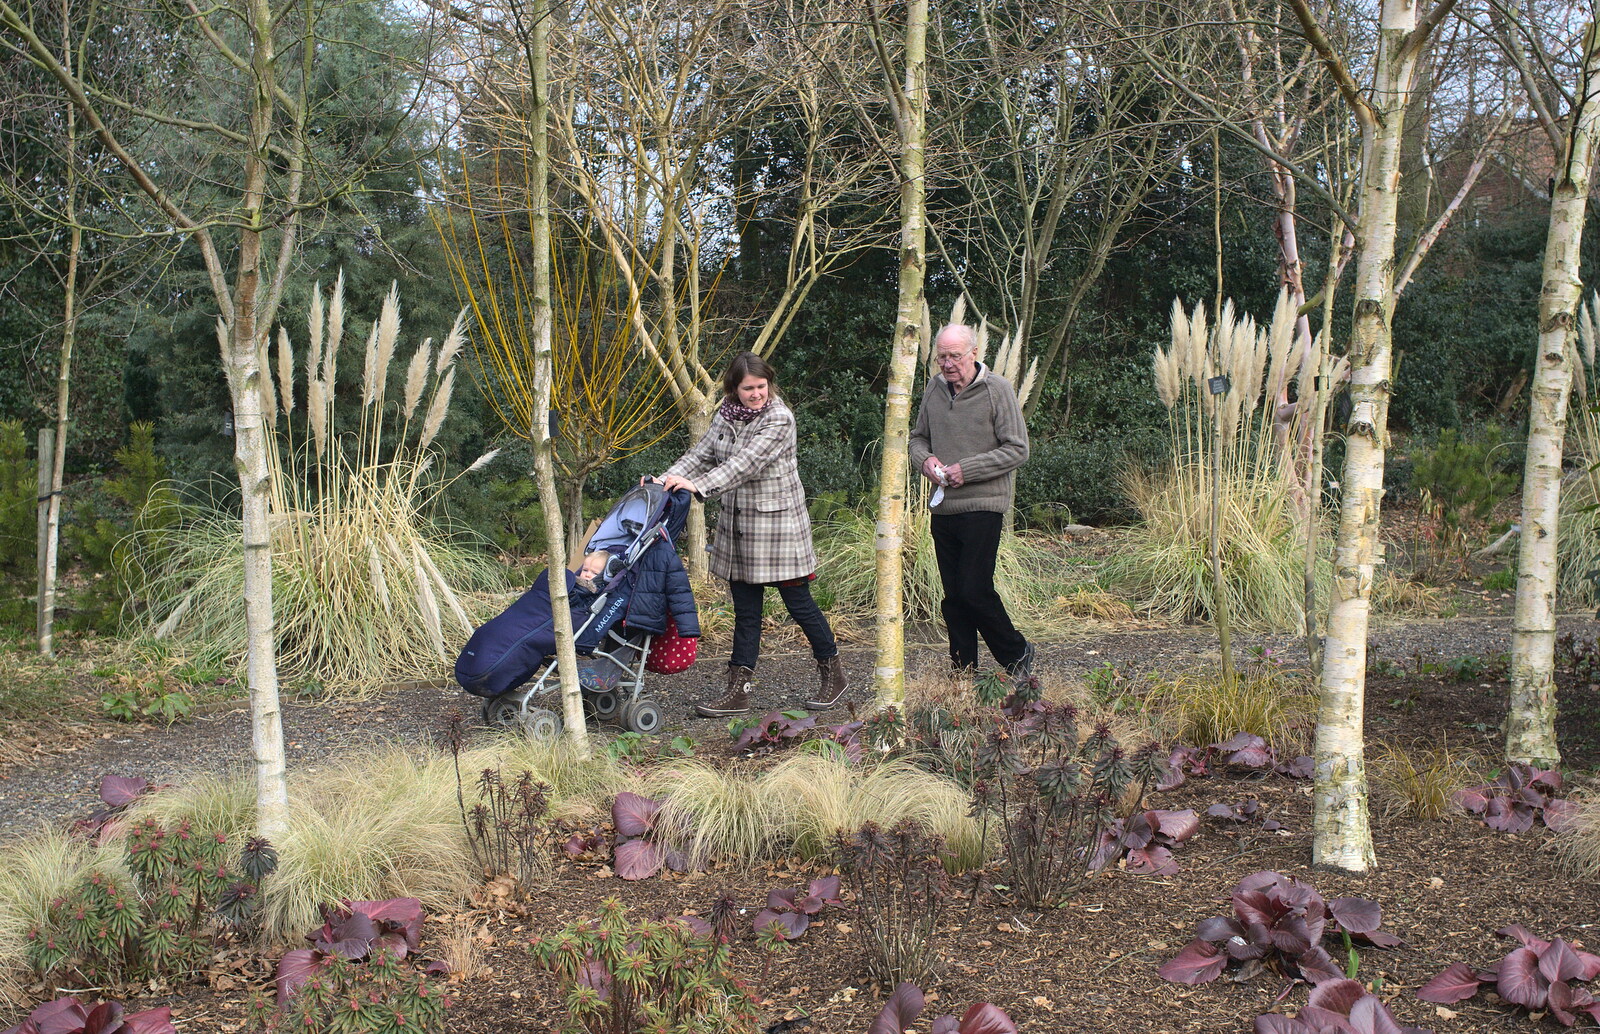 Isobel, Harry and Grandad trundle around from A Walk around Bressingham Winter Garden, Bressingham, Norfolk - 3rd March 2013